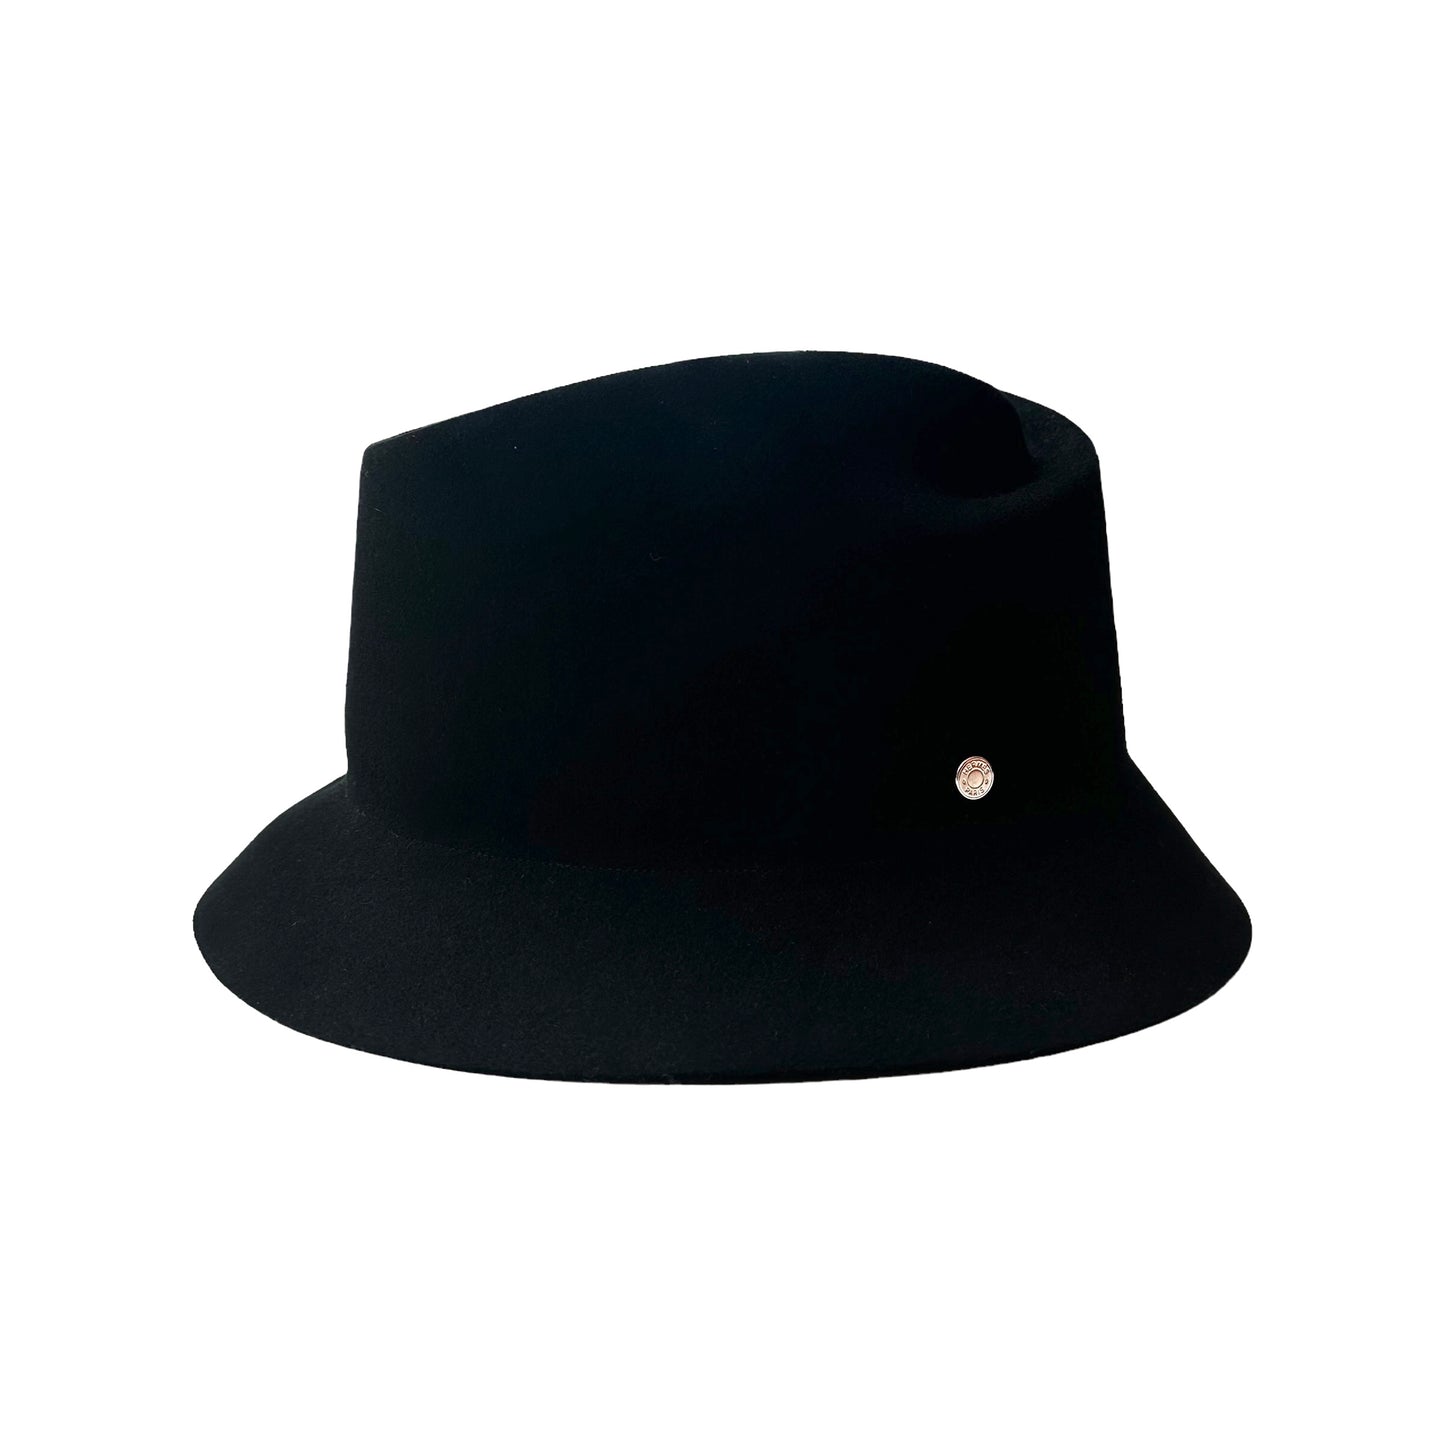 Black Felt Hat - 57